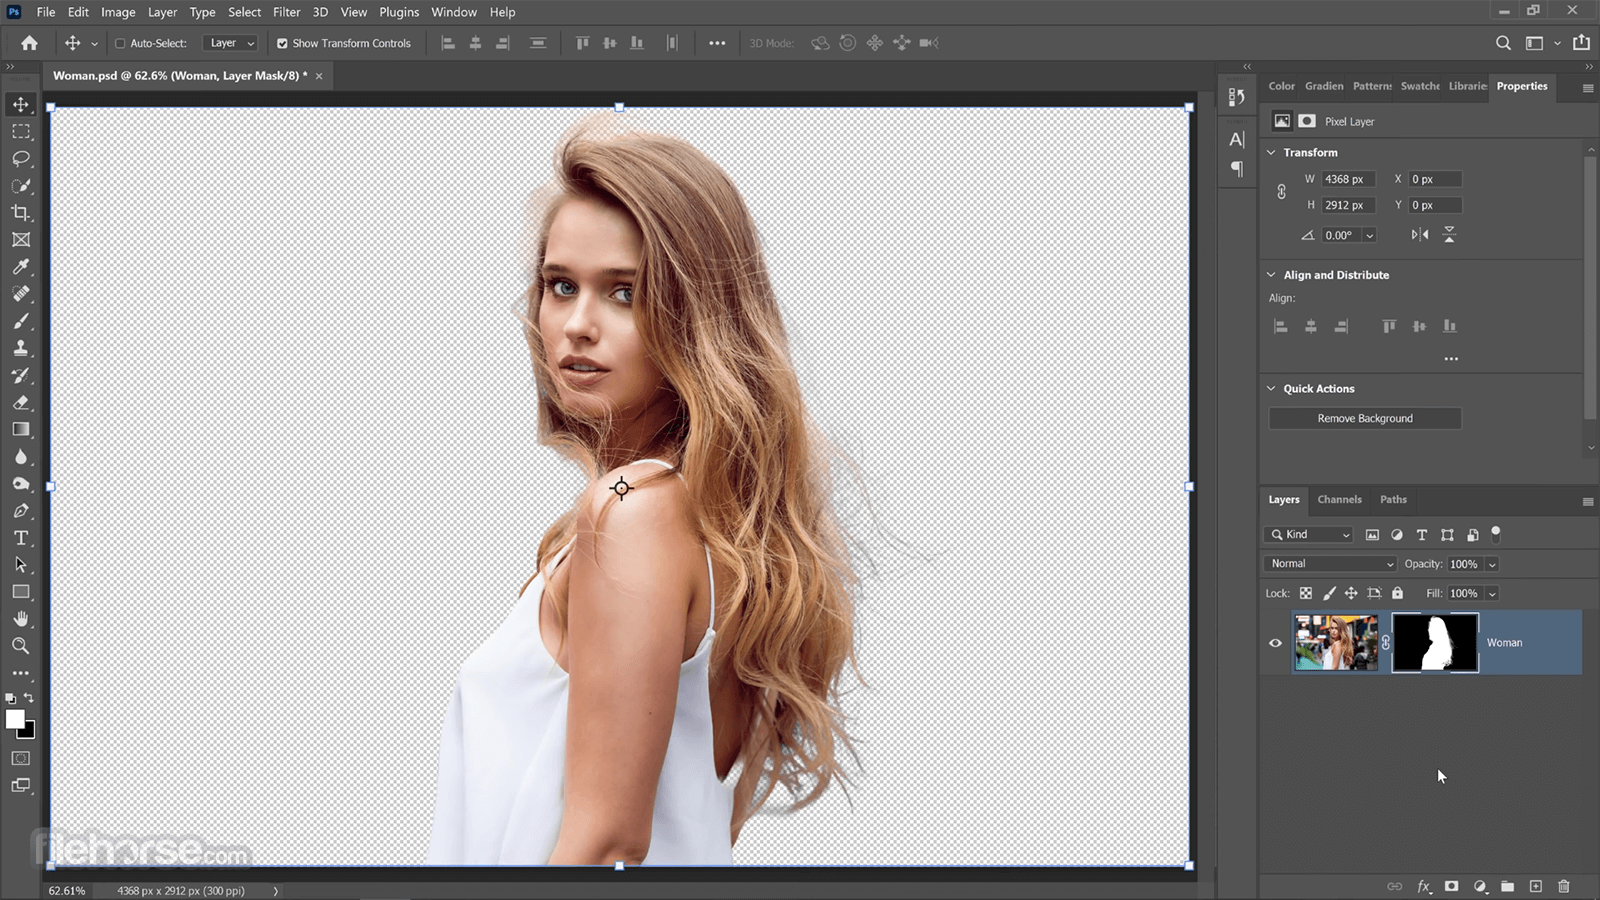 Adobe Photoshop 2021 Crack v22.5.0.384 Full Version Pre-Activated [Latest]